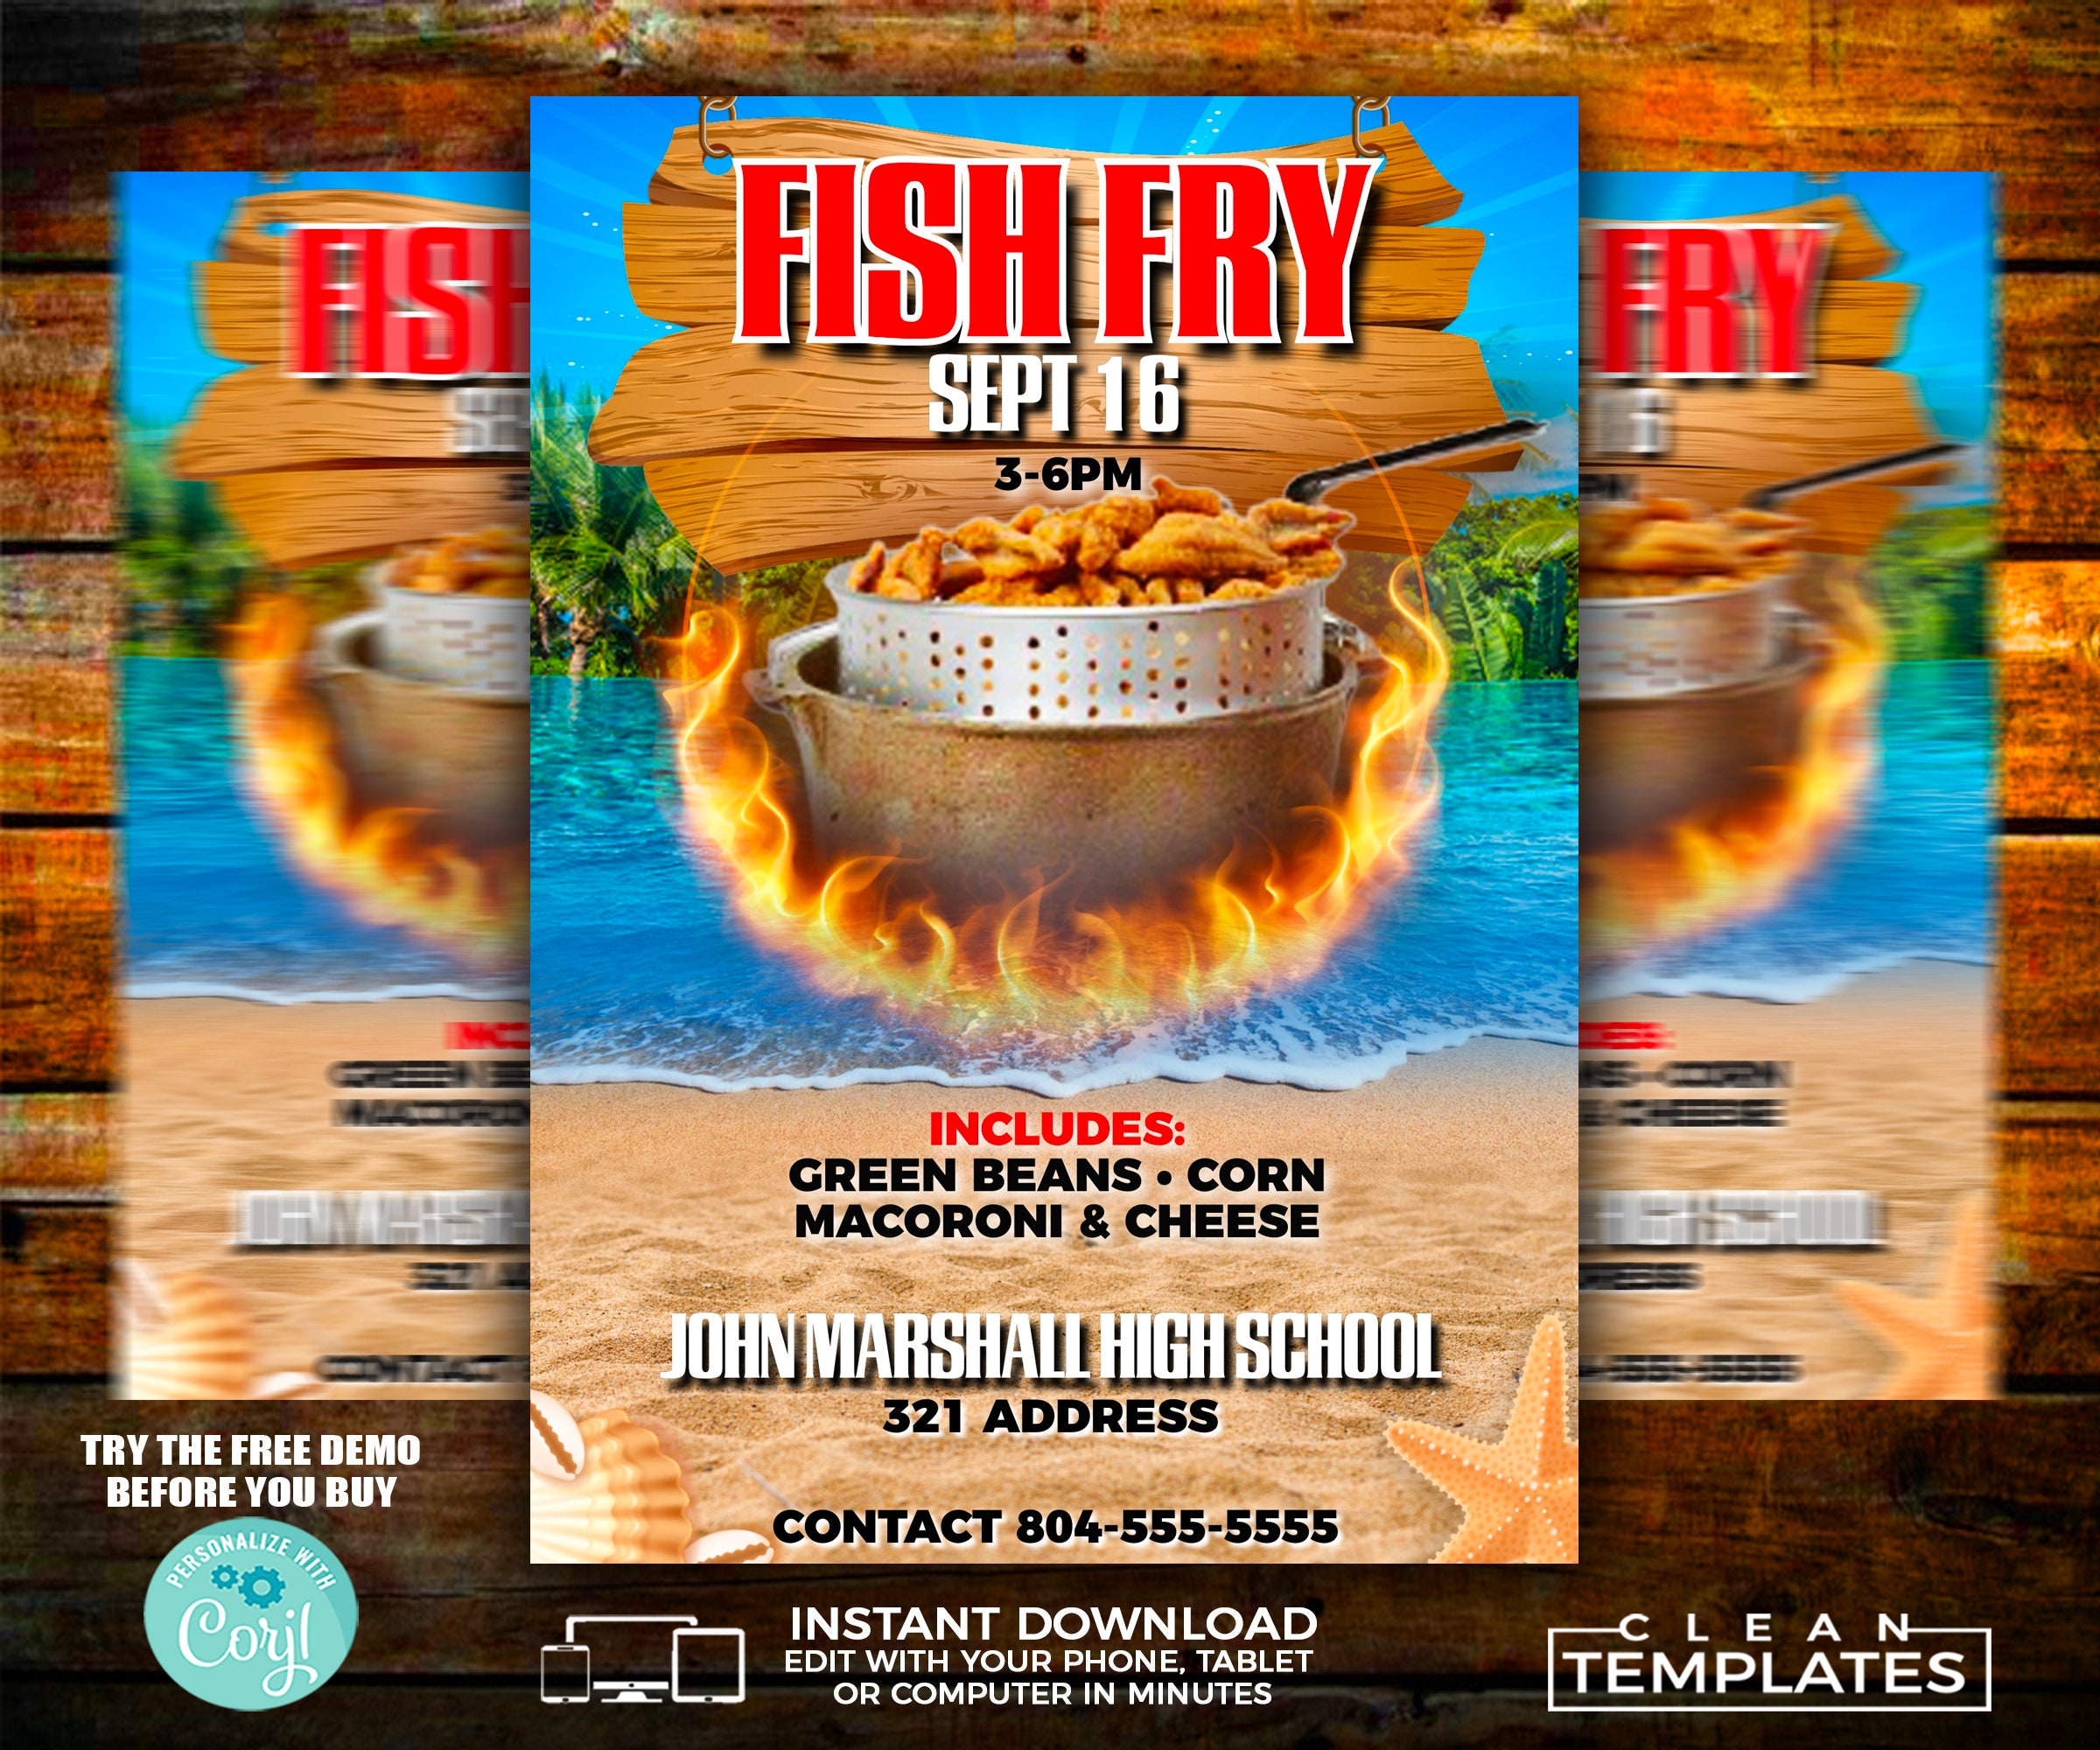 fish-fry-flyer-edit-online-5x7-digital-printable-do-it-yourself